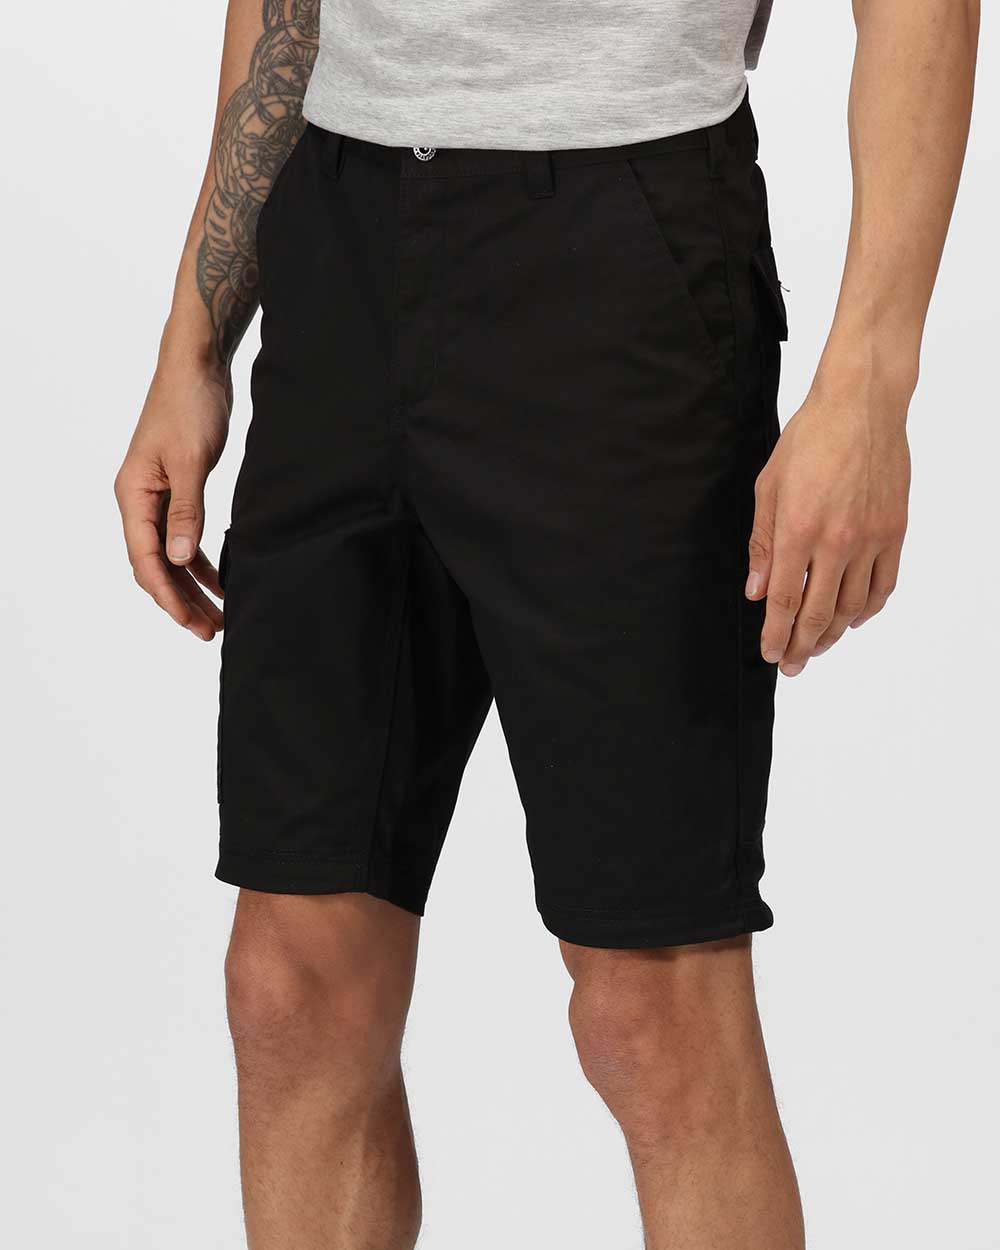  Regatta Pro Cargo Shorts in Black 